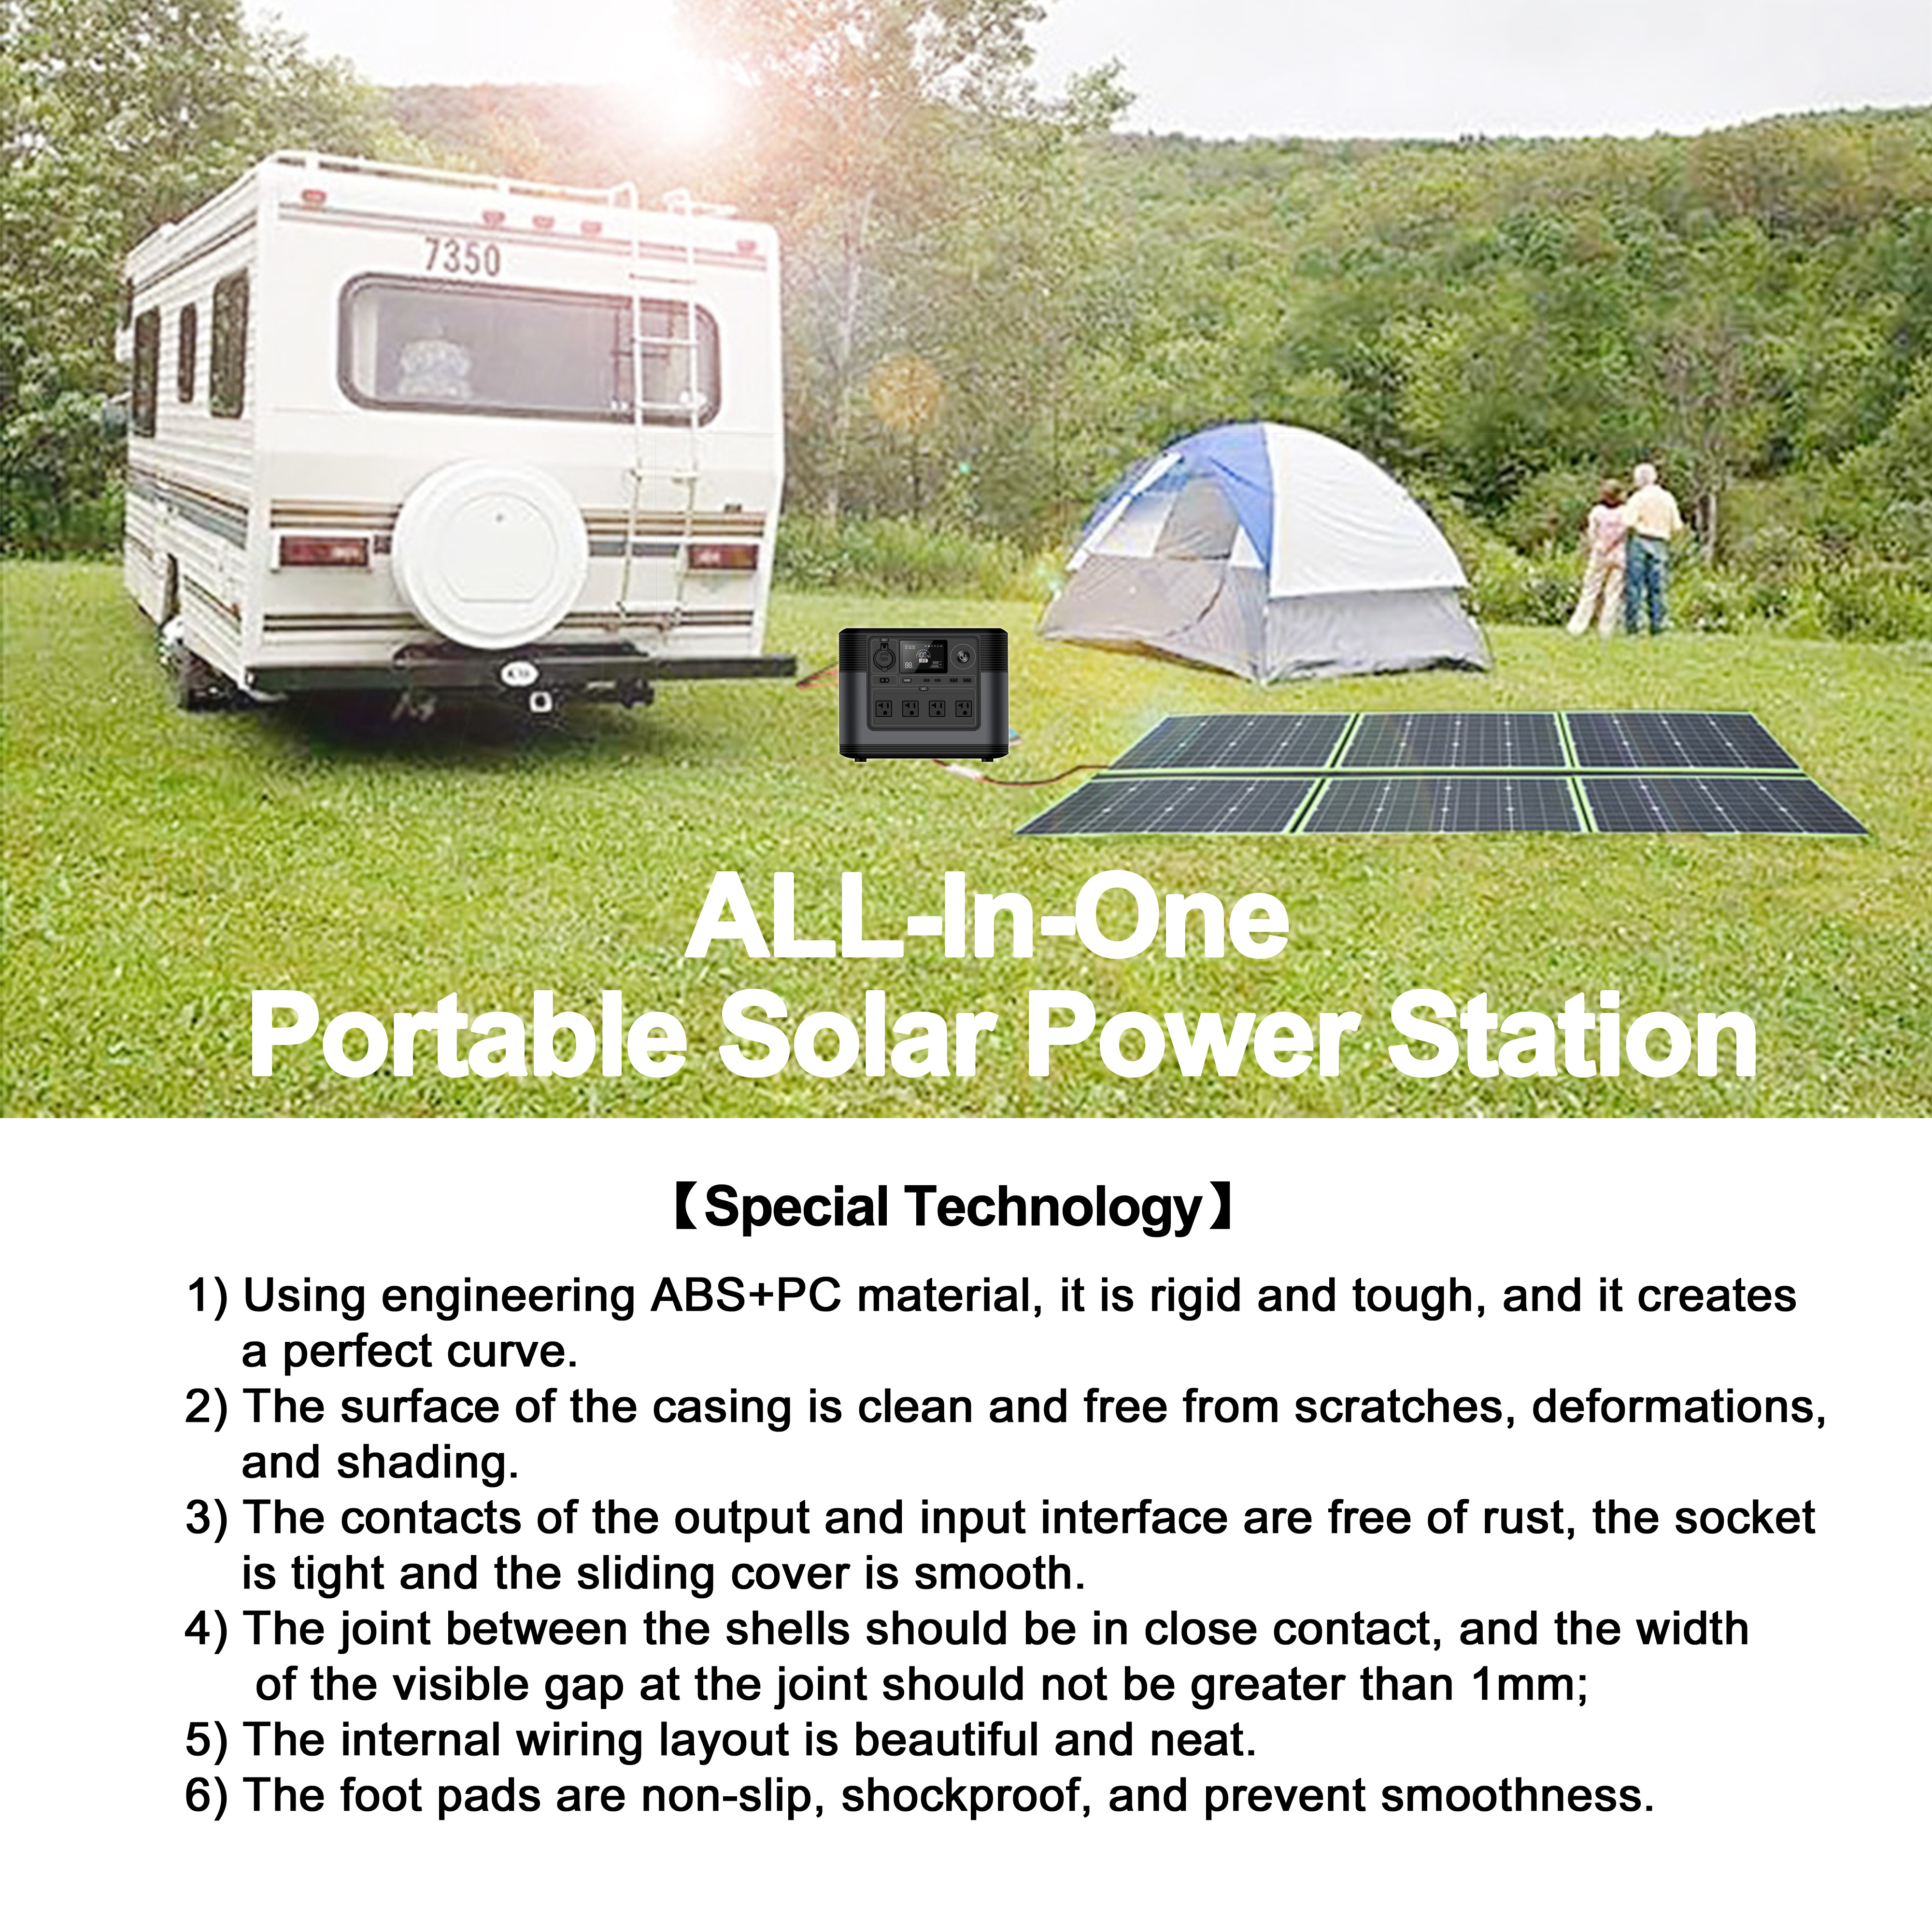 Solar Generator 1200W Mobile Portable Power Station 1500MAH 1008Wh